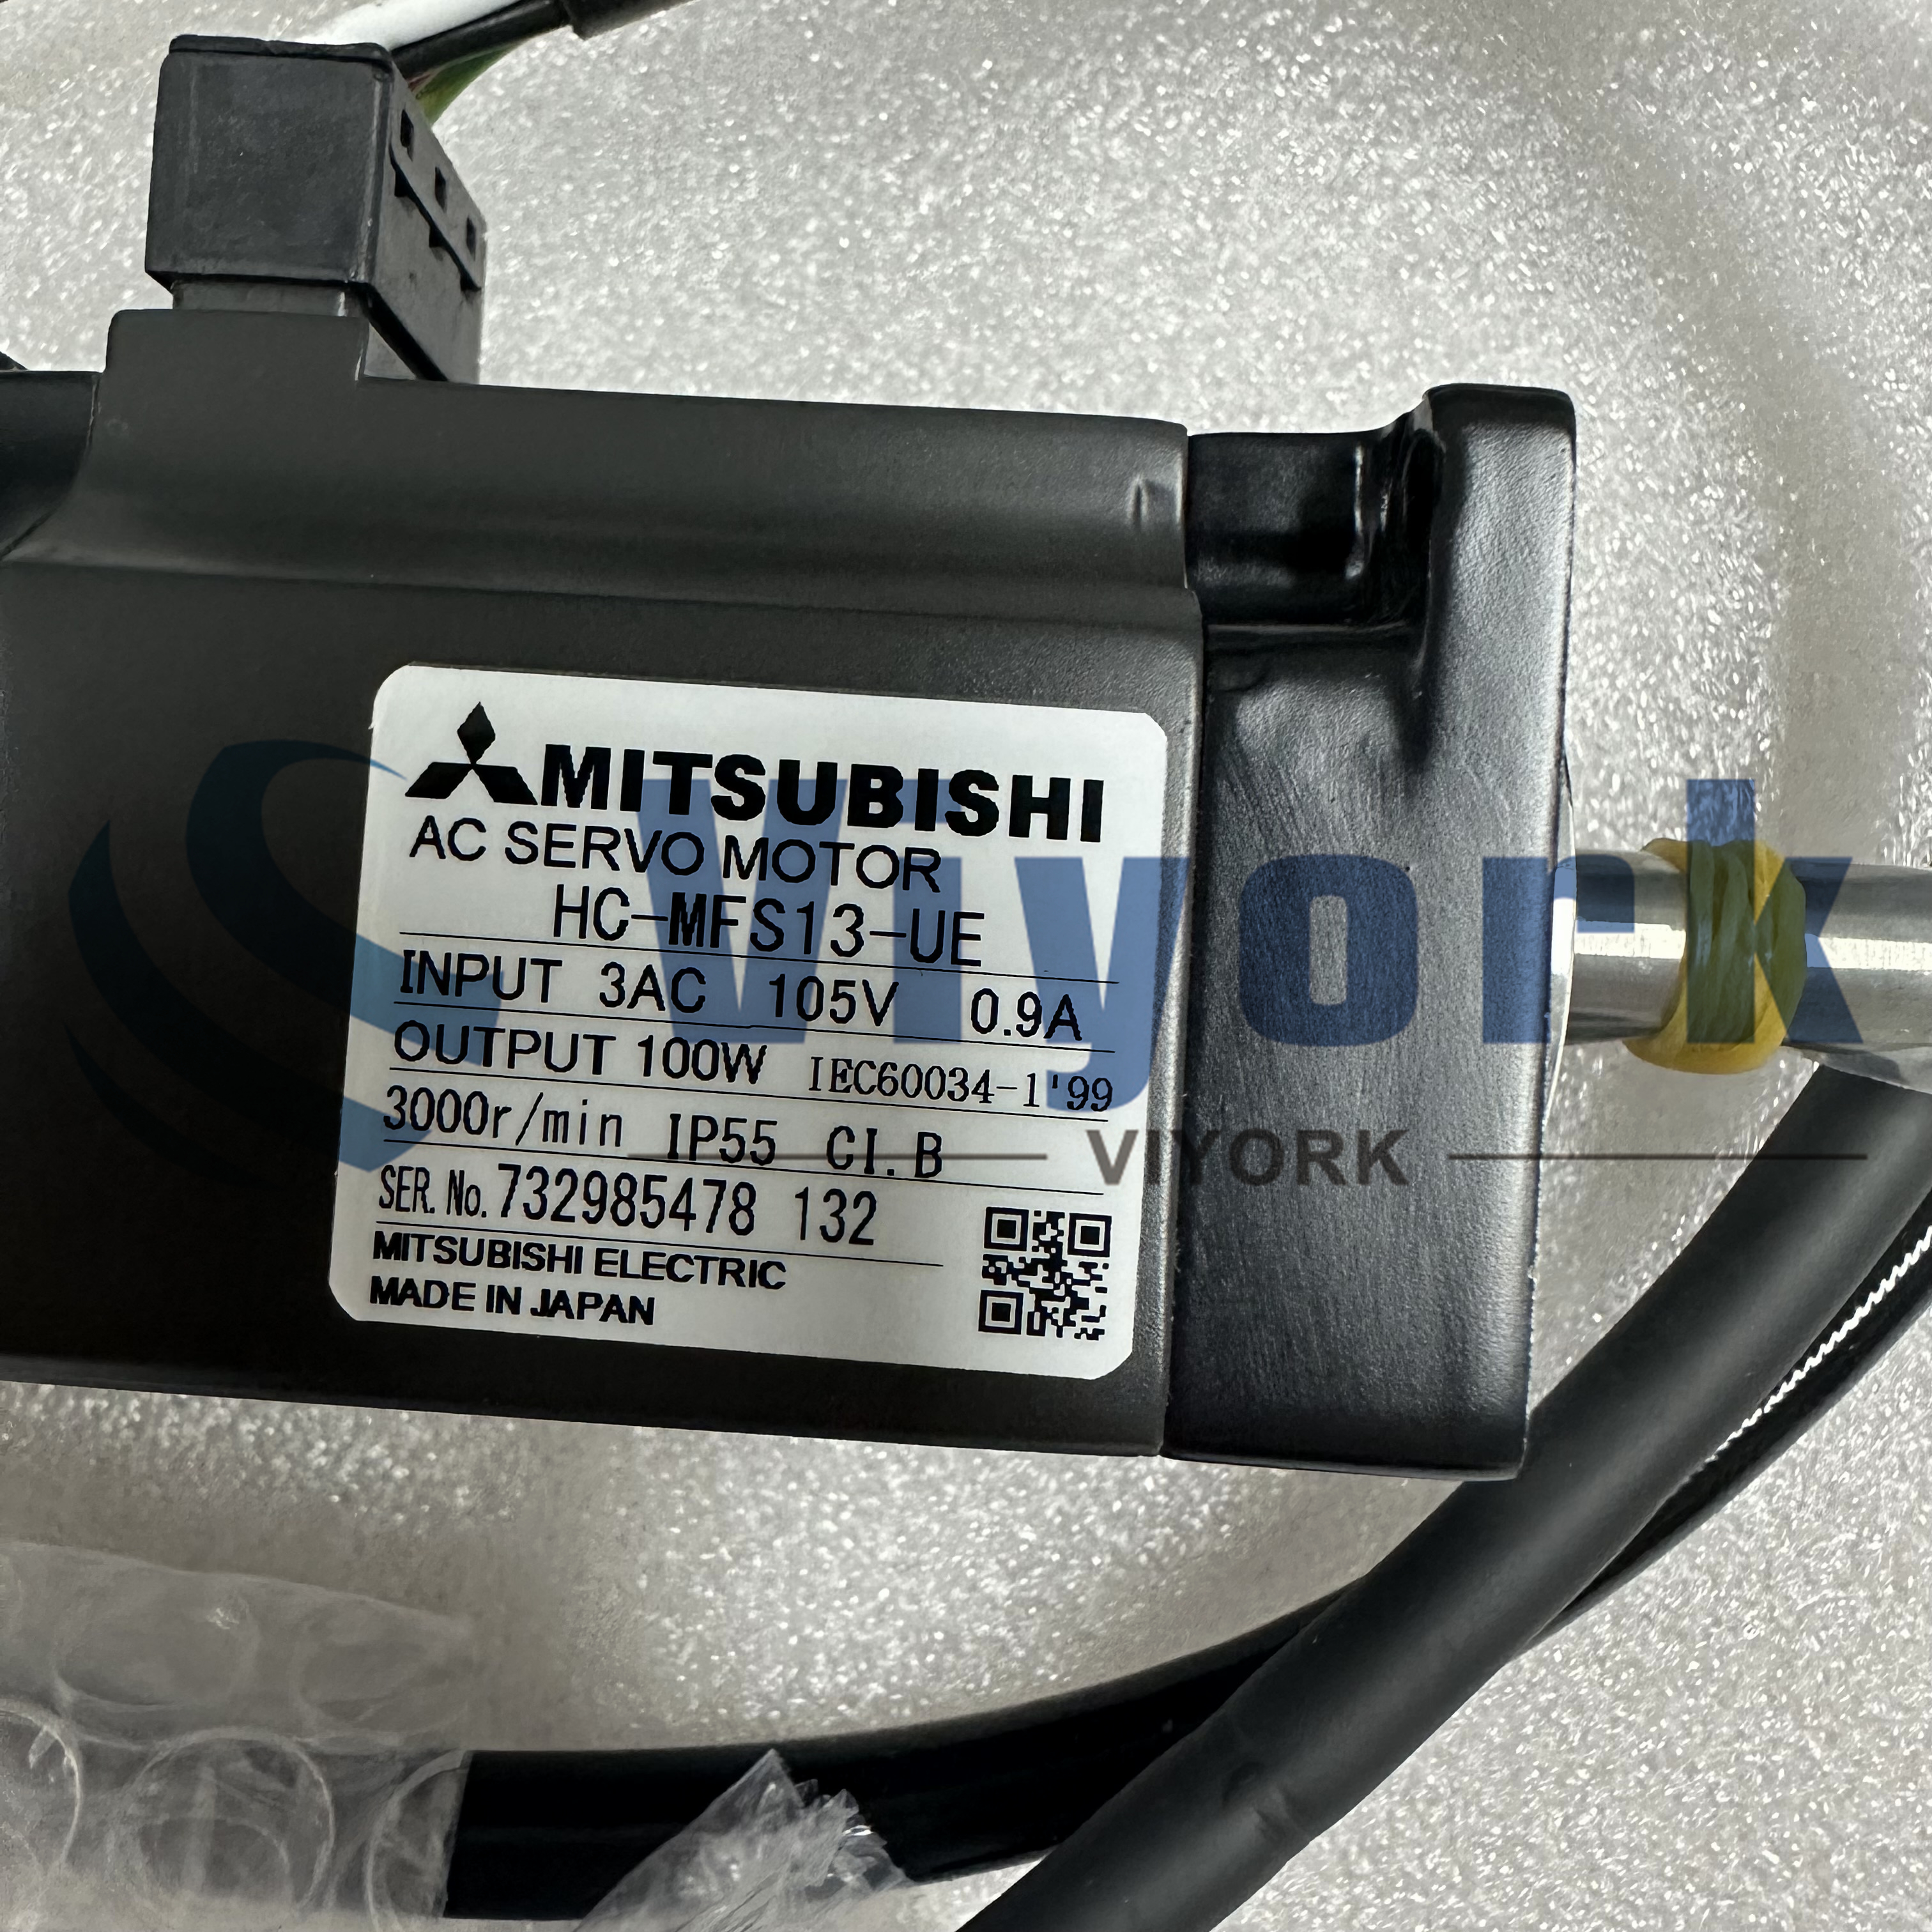 Mitsubishi HC-MFS13-UE AC SERVO MOTOR AC 100W 3PH 105V 0.9A 3000RPM NEW